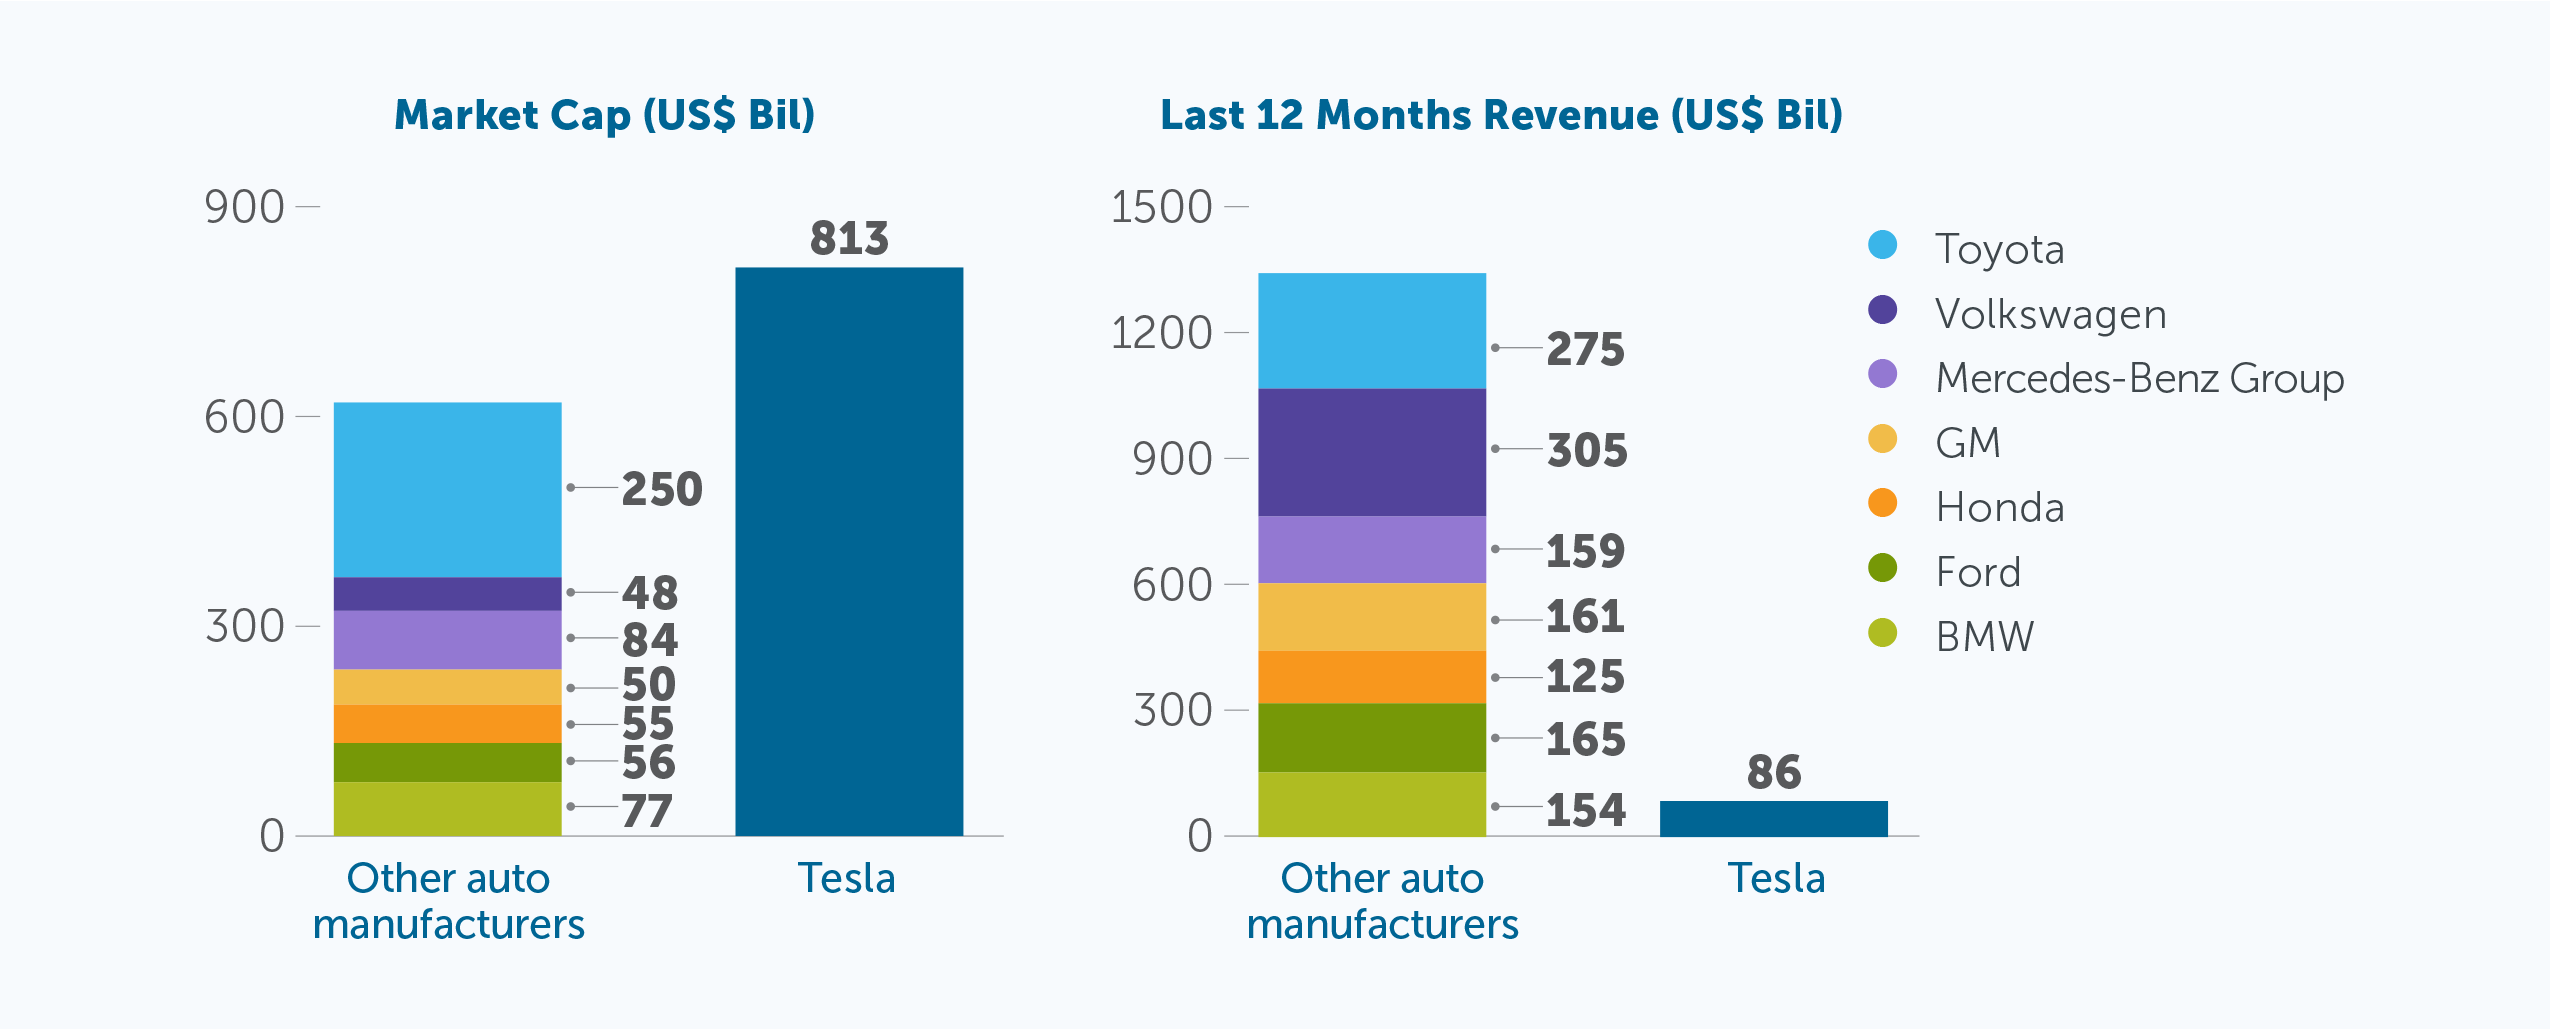 Market Cap (US$ Bil) vs. Last 12 Months Revenue (US$ Bil) for Toyota, Volkswagen, Mercedes-Benz Group, GM, Honda, Ford, BMW